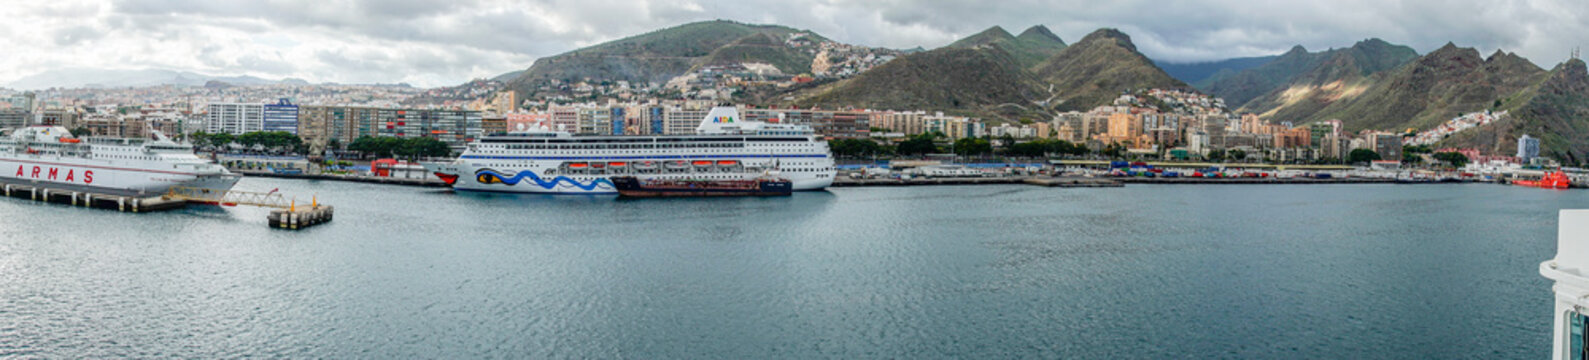 Santa Cruz de Tenerife, Canary Islands, Spain - December 8, 2019: Cruise ships and boats in port of Santa Cruz de Tenerife, Canary Islands, Spain